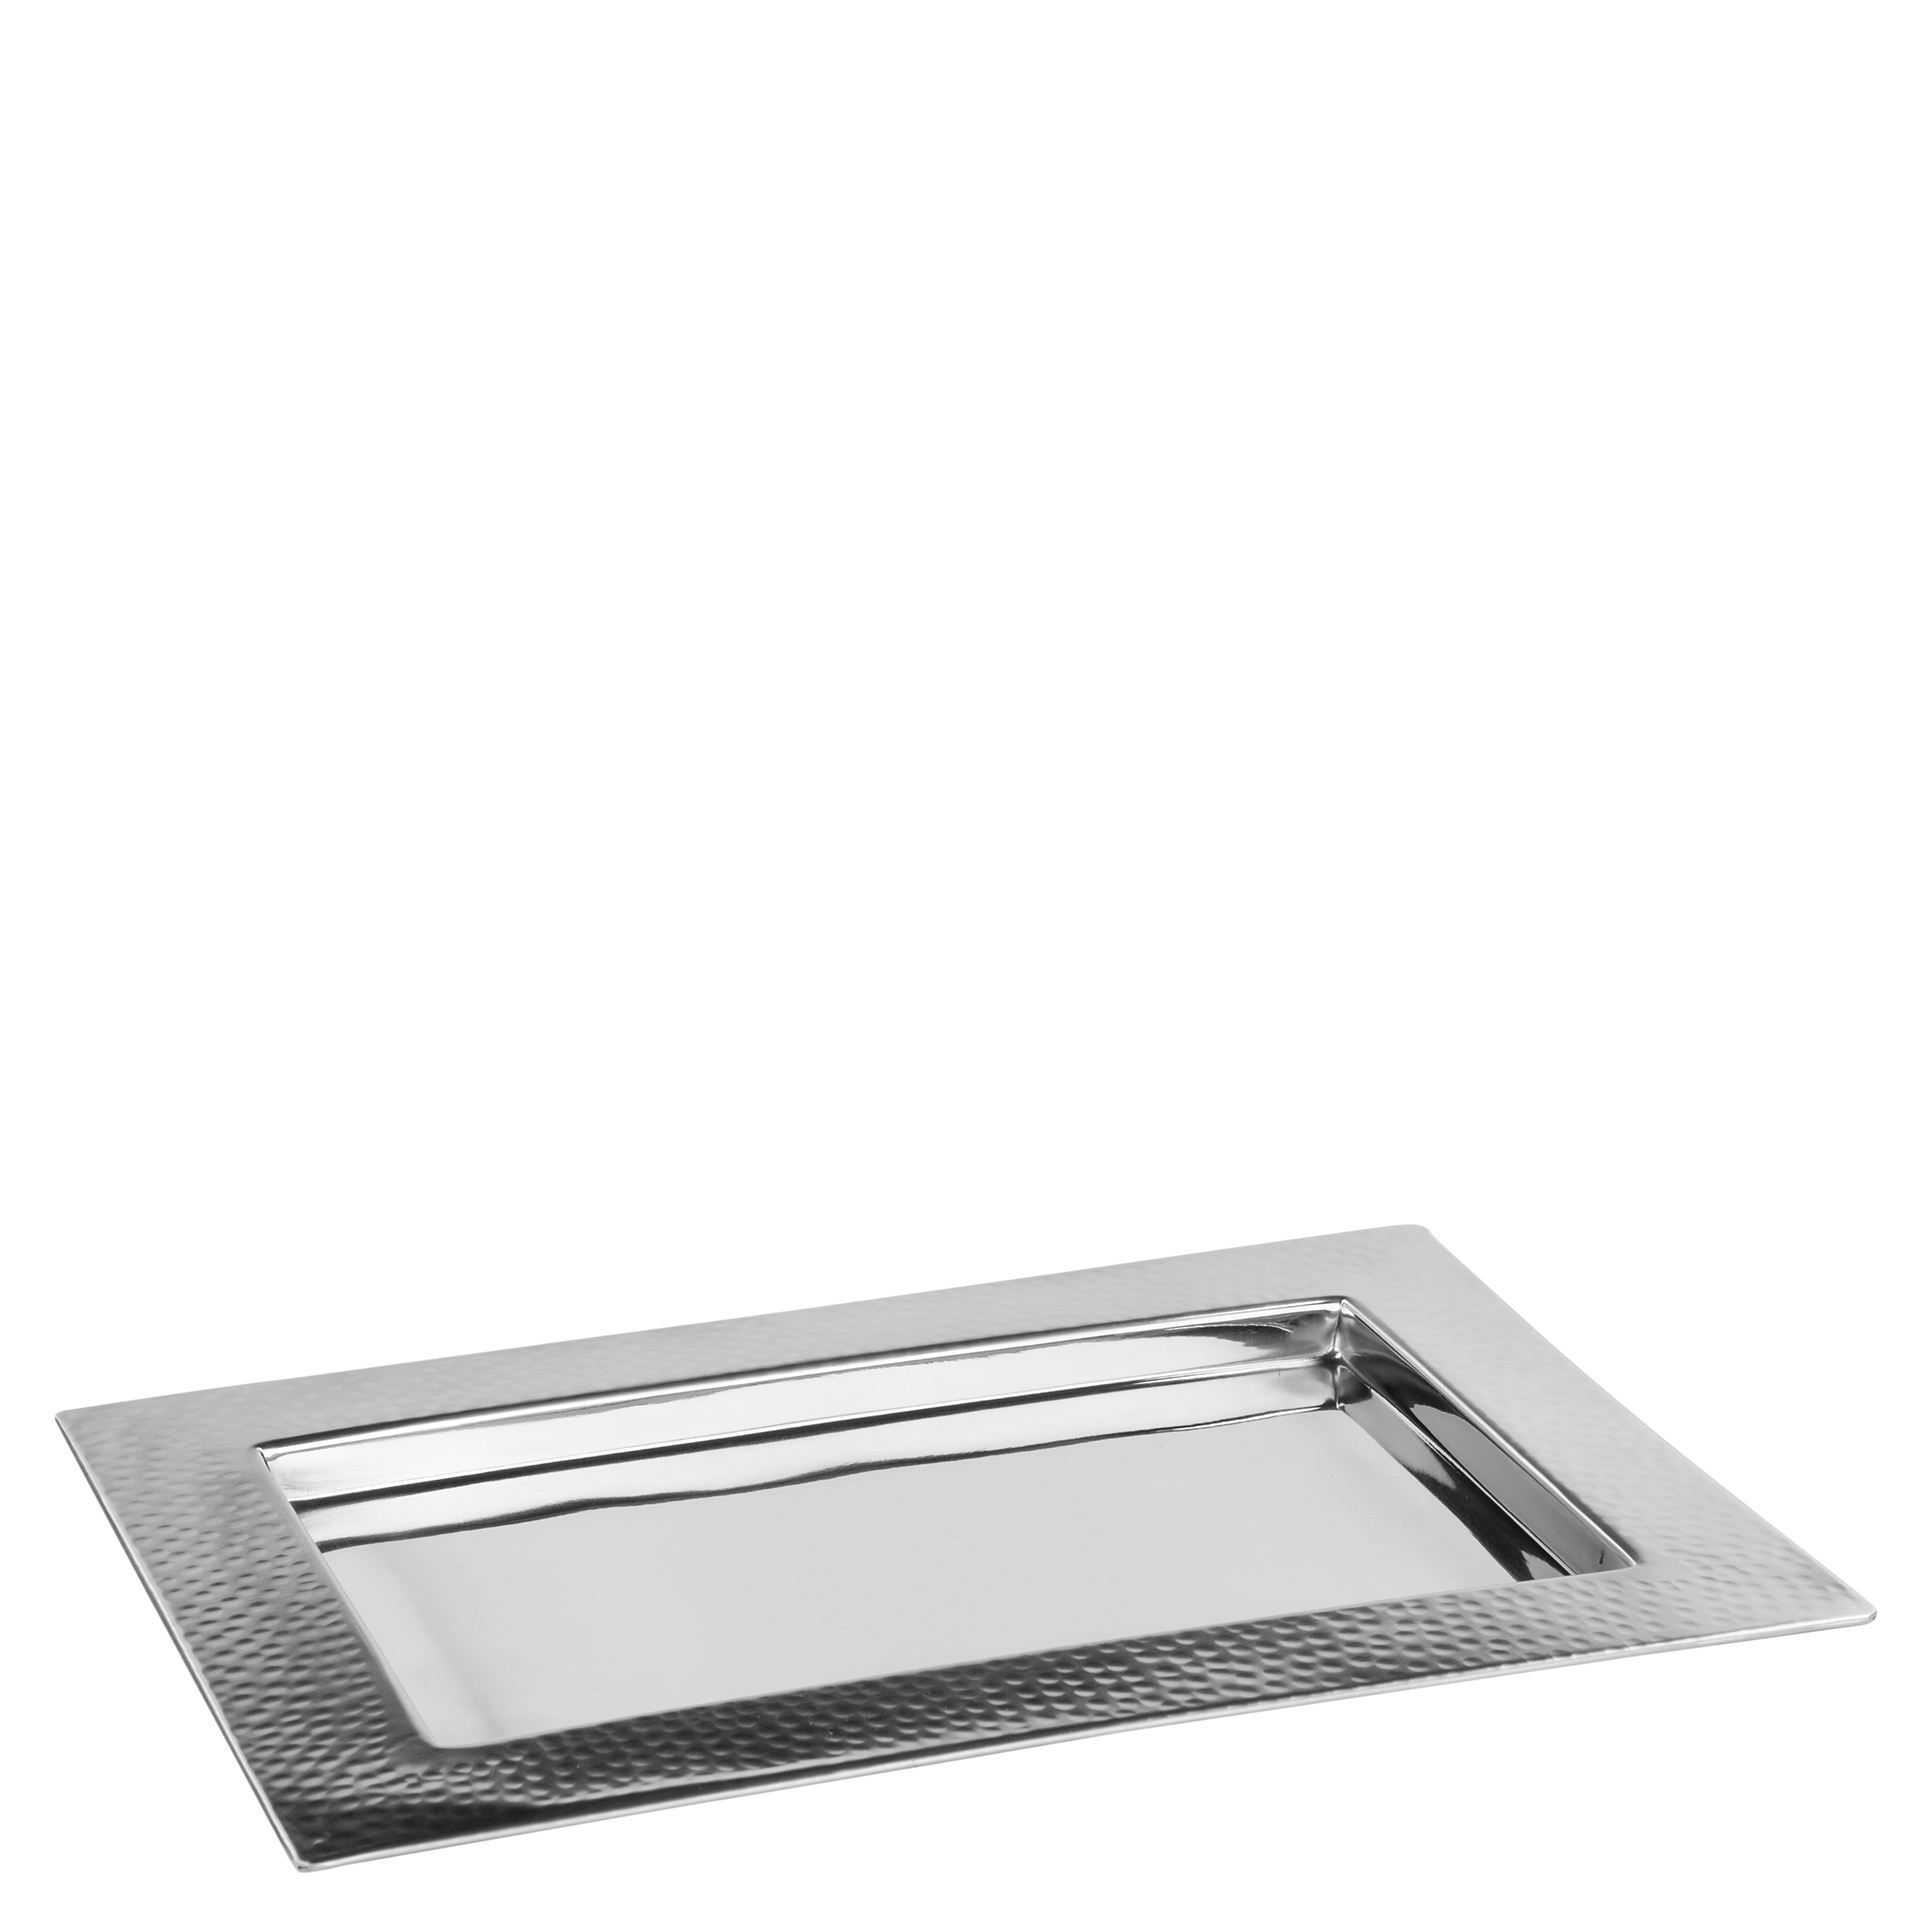 Lazio Tablett Edelstahl Silber 34 x 24 x 2 cm 